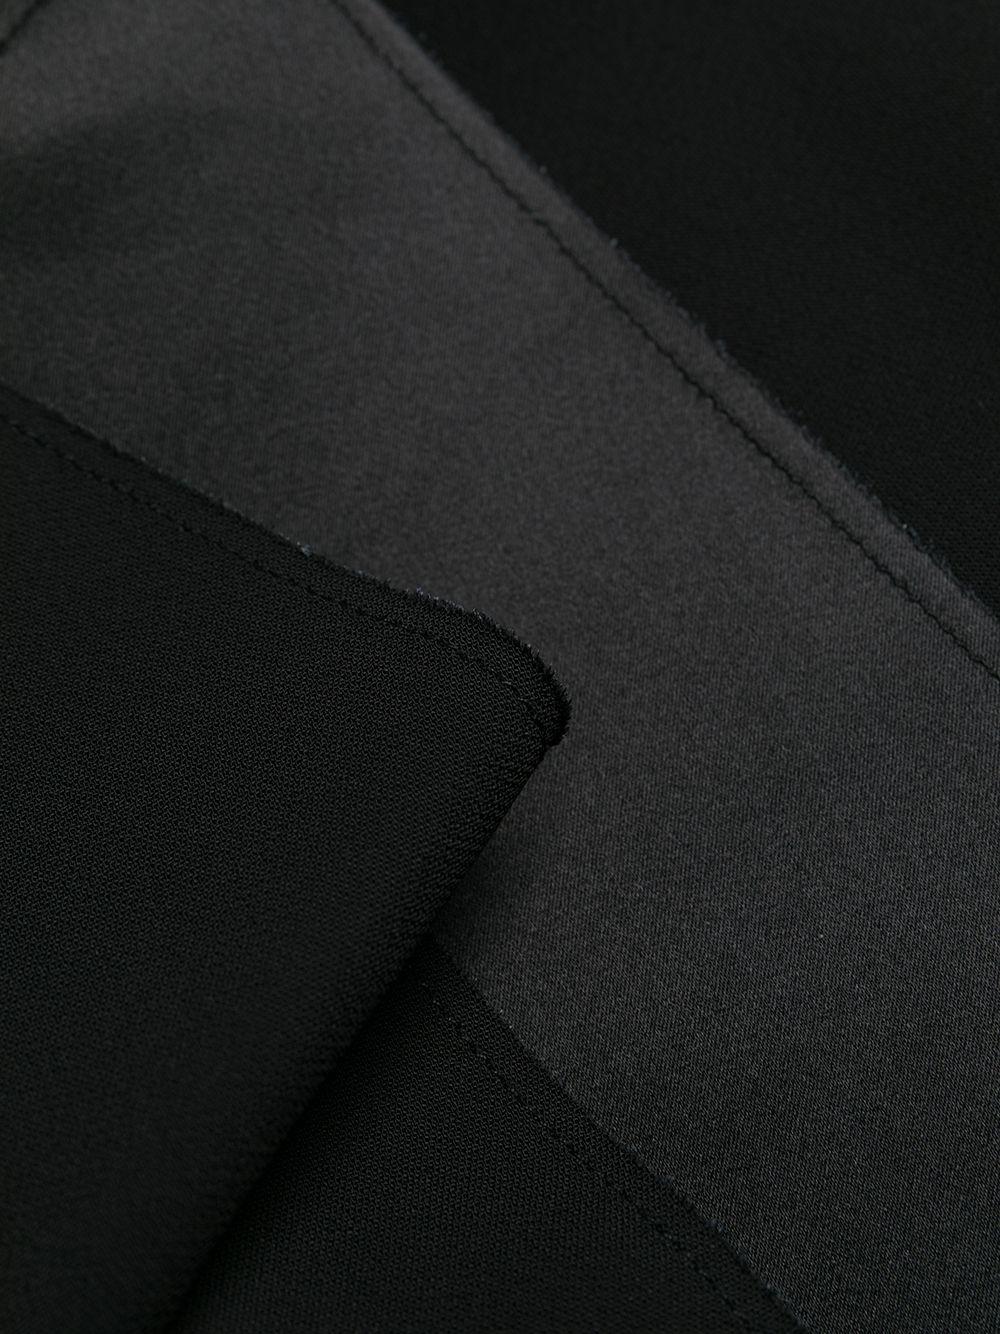 Versace Spring 2020 Black Strapless Ruffle Mini Cocktail Dress Size 38 3